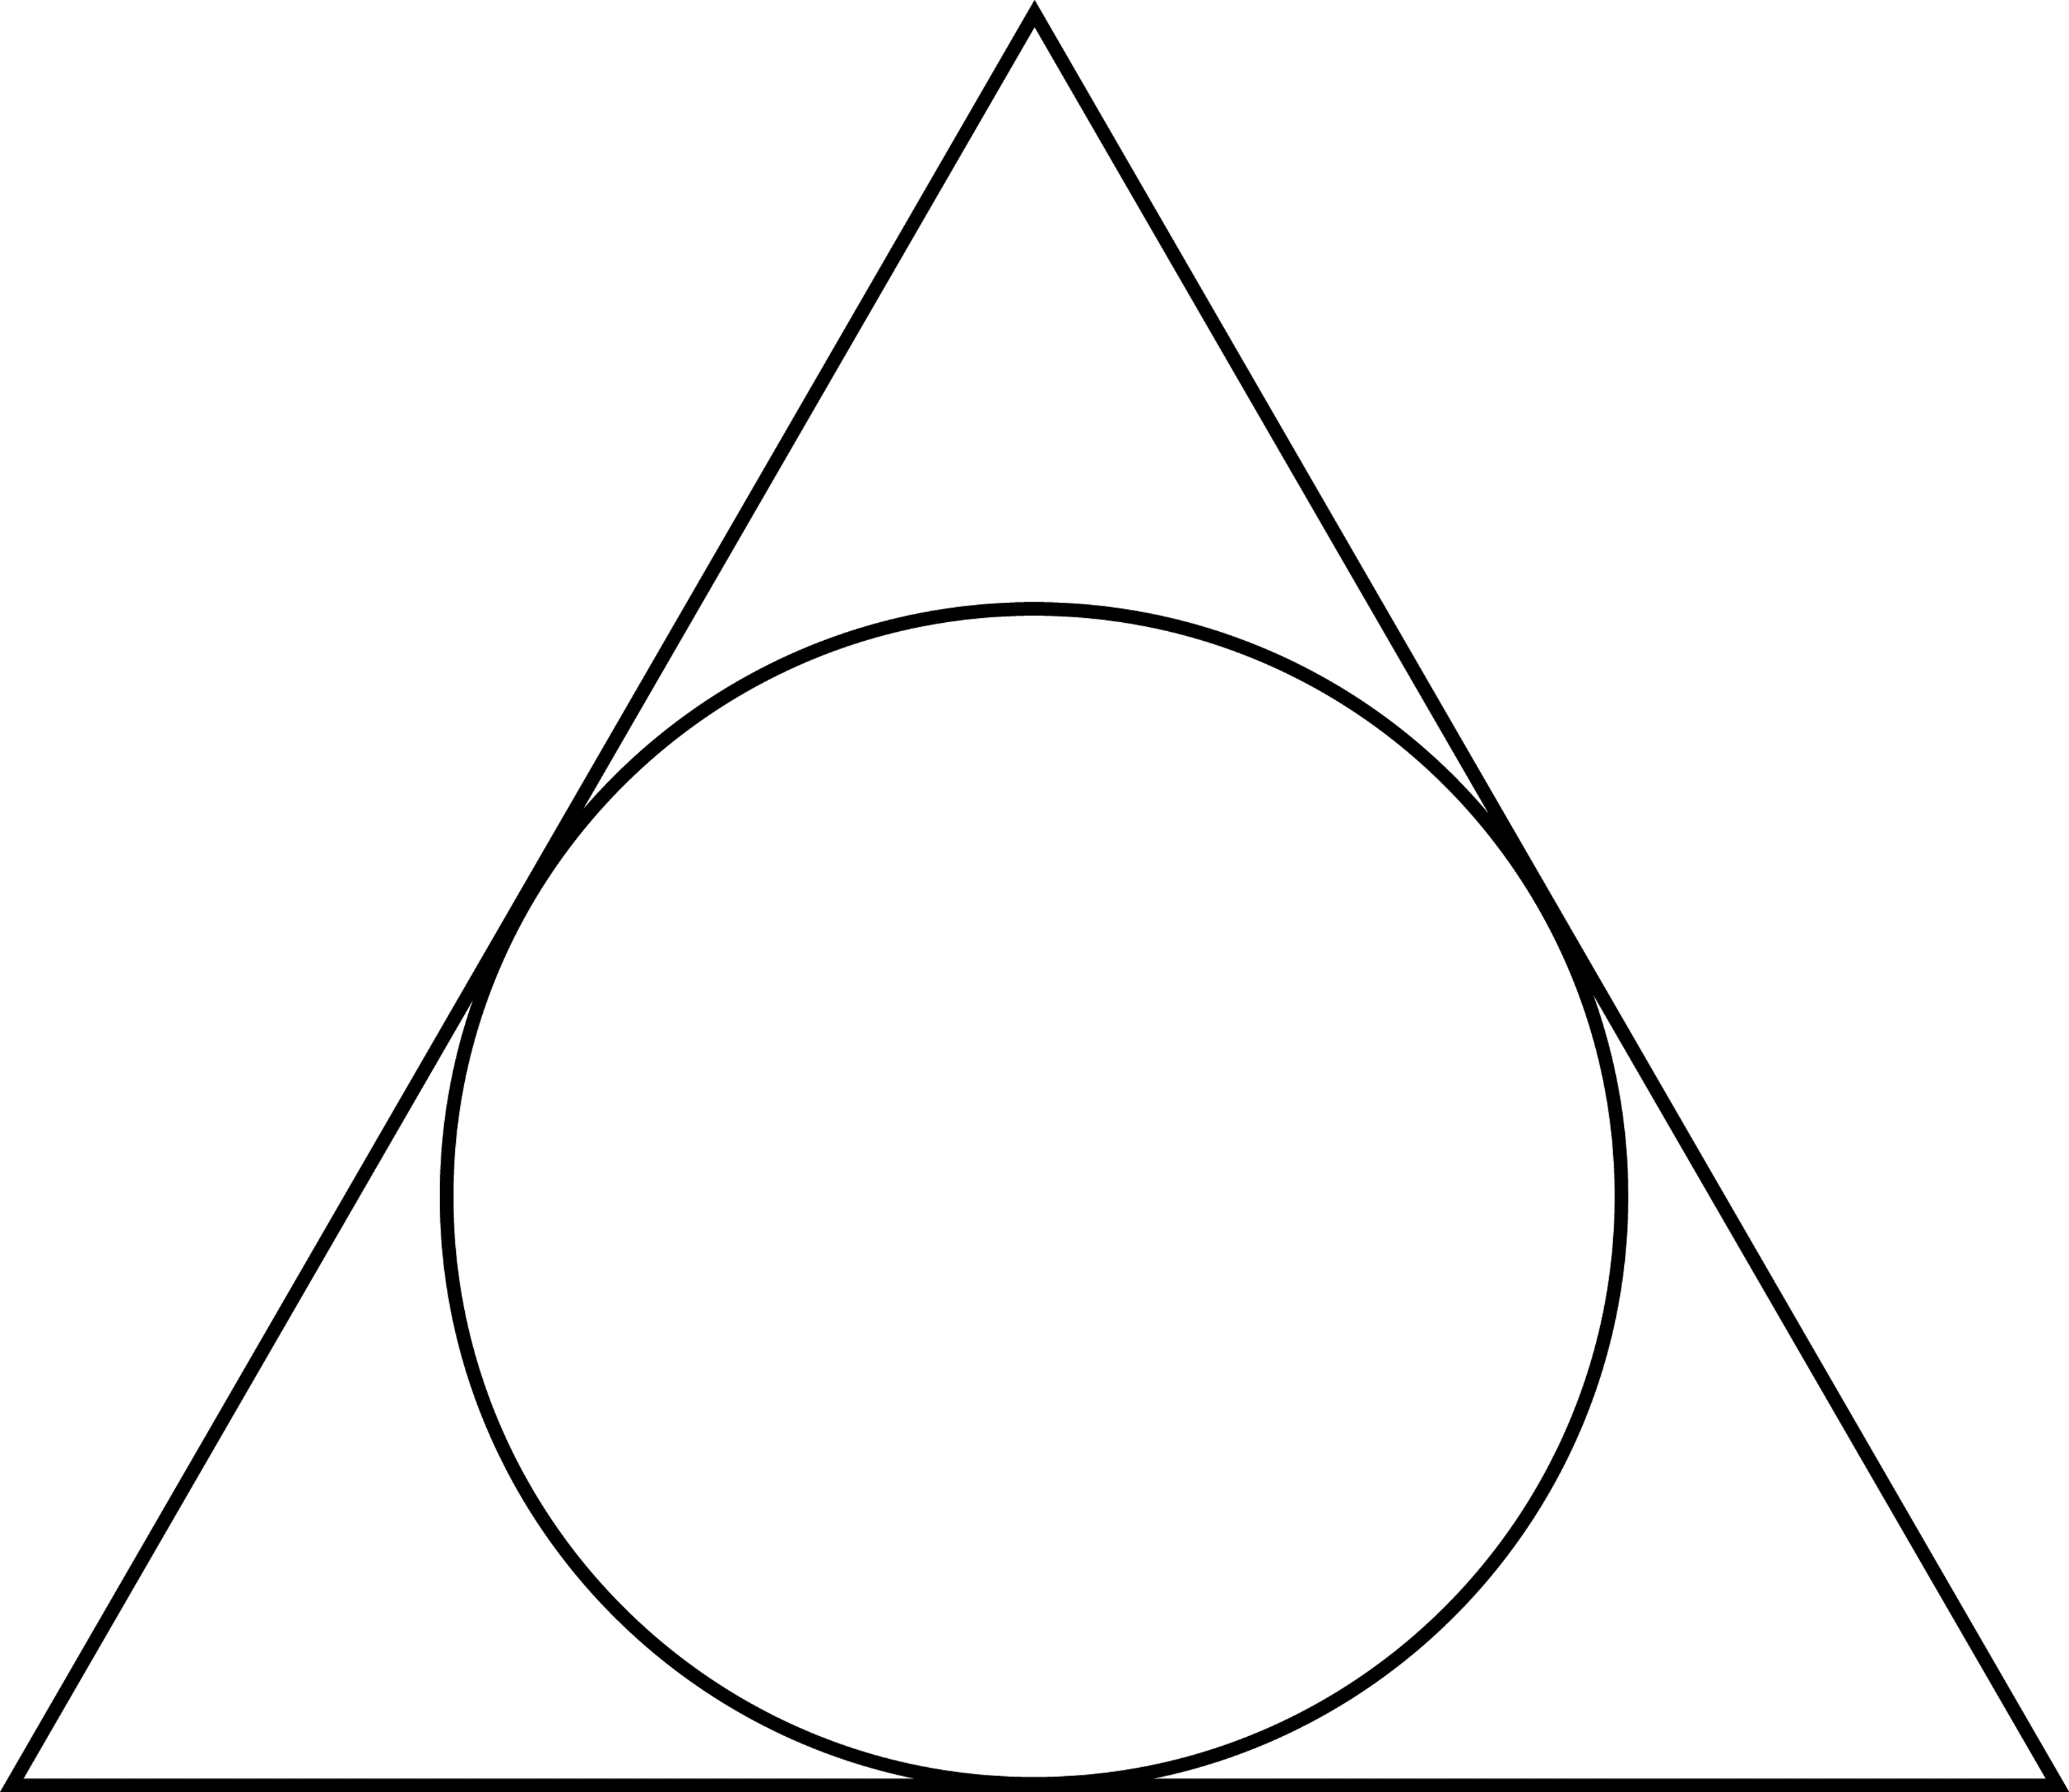 Треугольник 1 9 90. Треугольник в круге. Треугольник с кругом внутри. Равносторонний треугольник в круге. Вписанные фигуры.